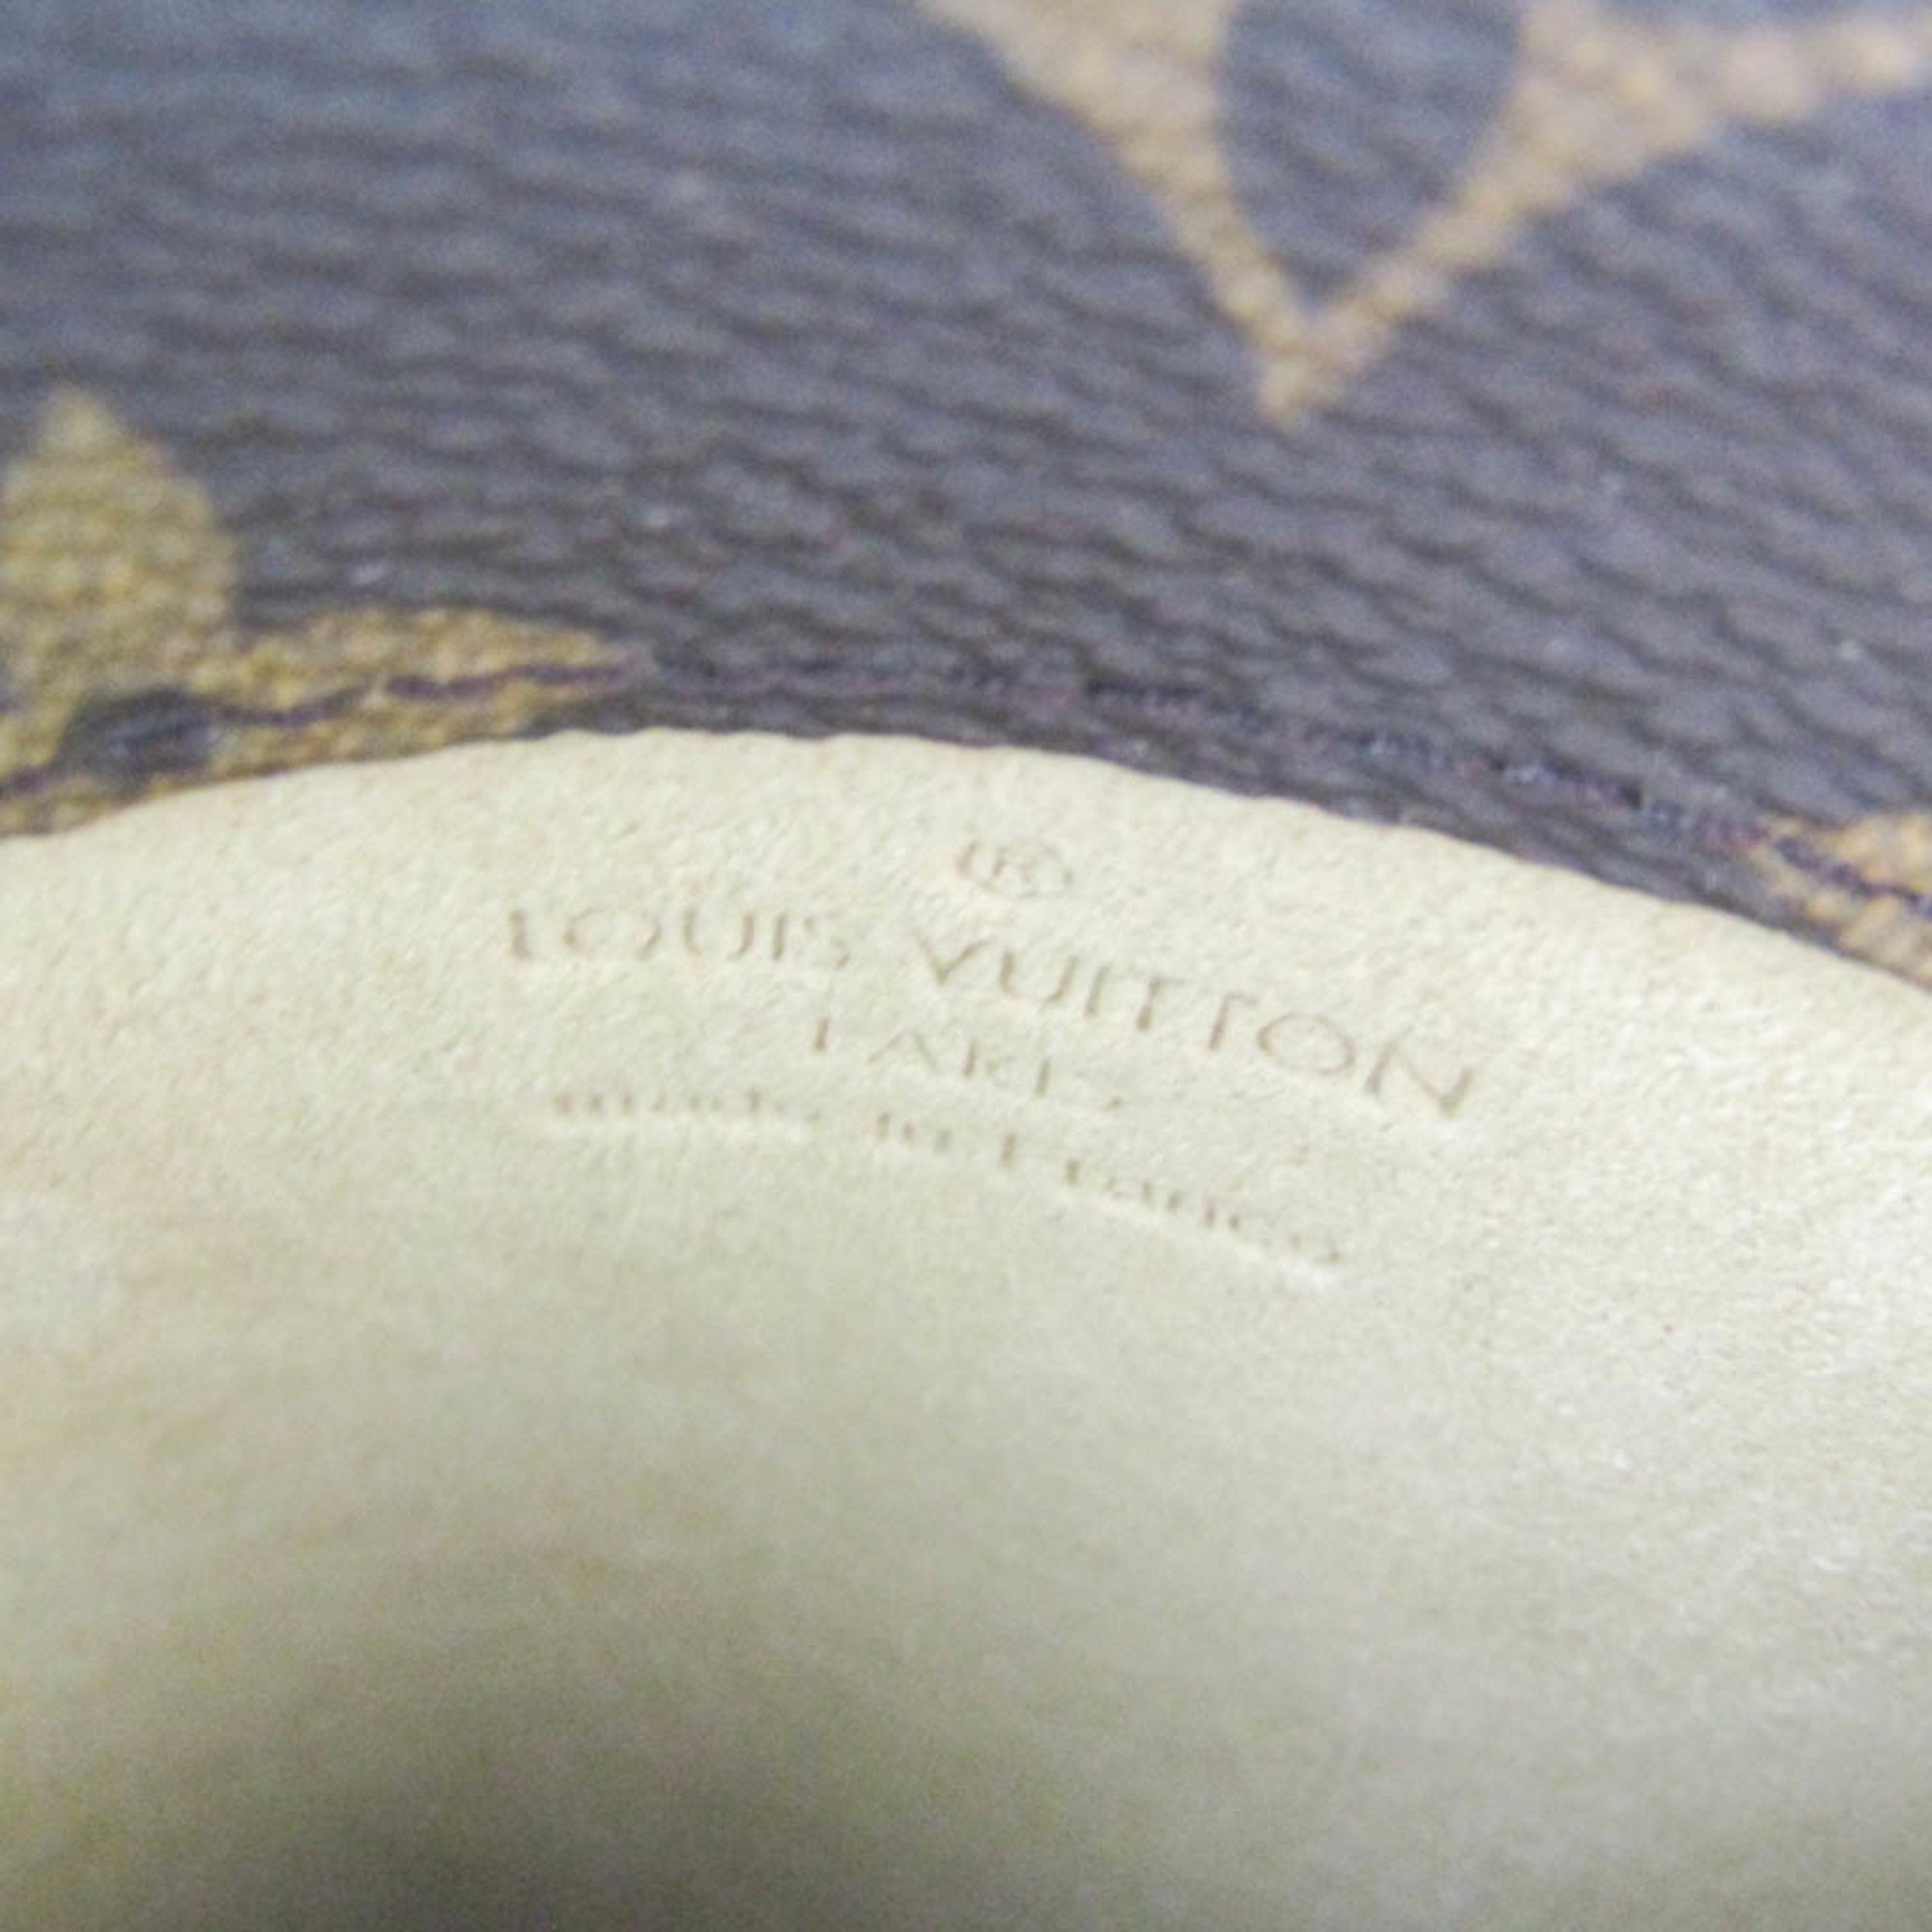 Louis Vuitton Monogram Etui Lunette Sarnpull M62962 Soft Eyeglass Case, Monogram